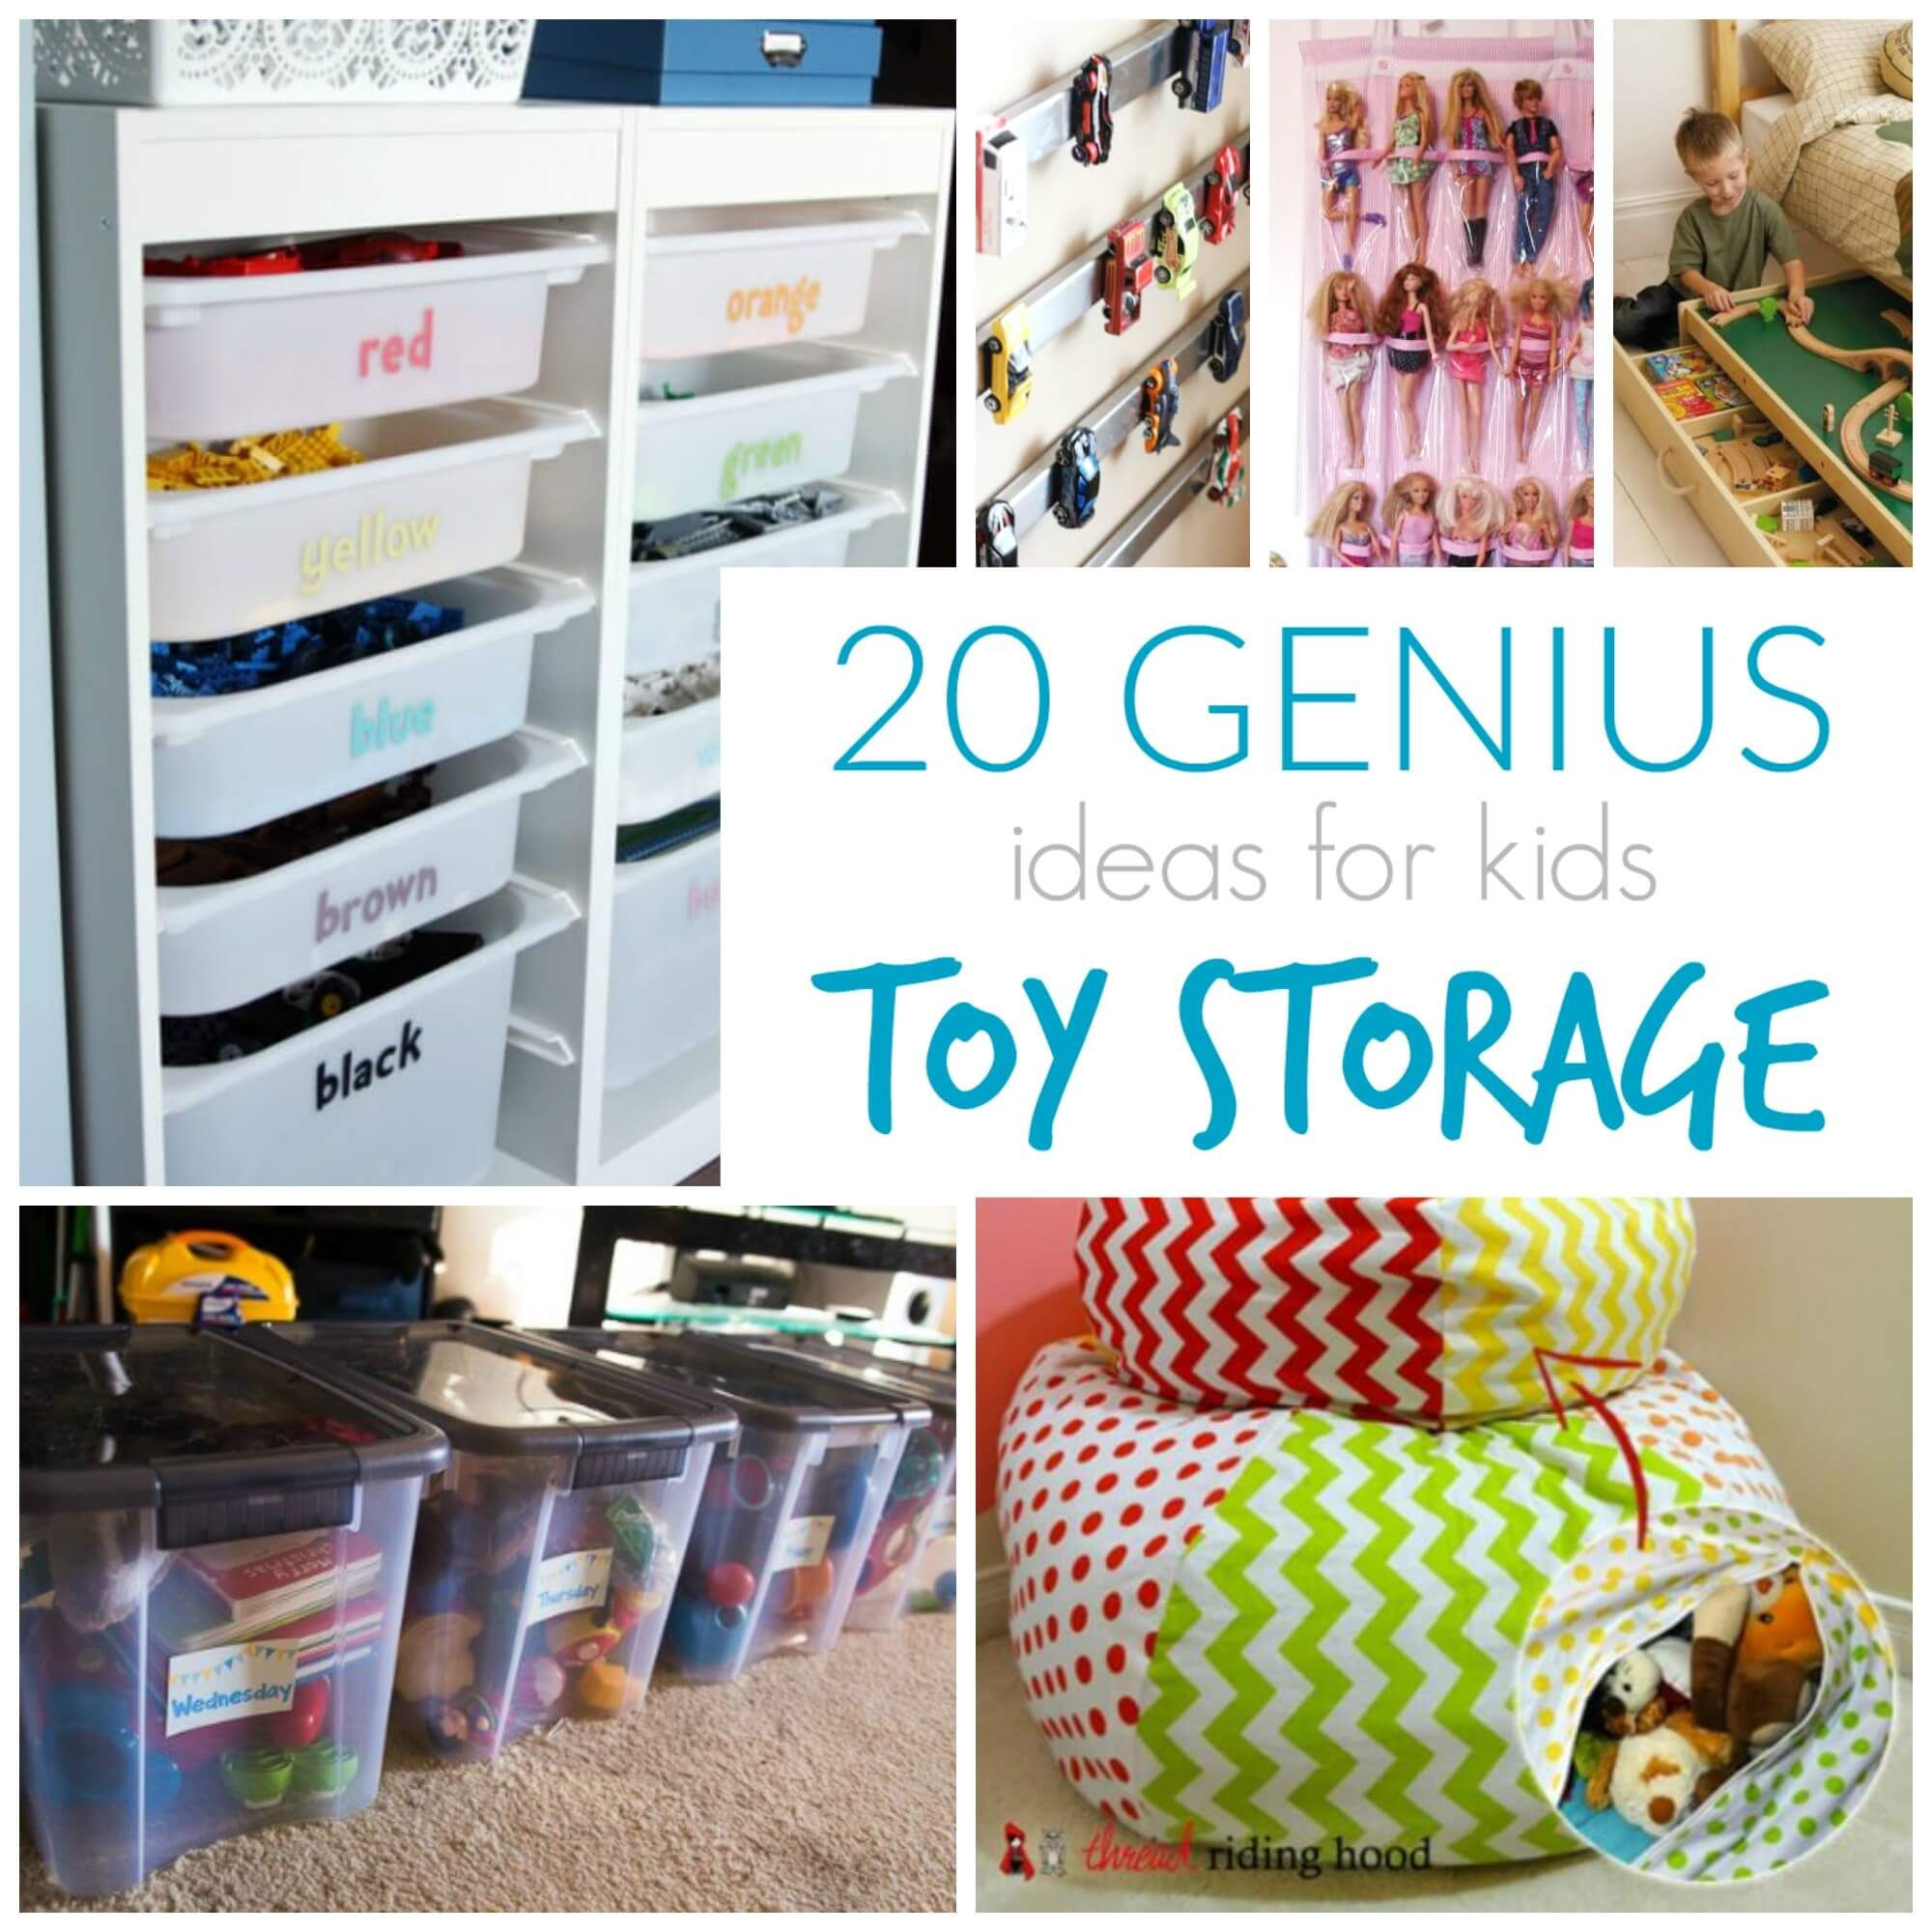 DIY Kids Room Storage
 7 1 Toy Storage Ideas 2019 DIY Plans In A Small Space